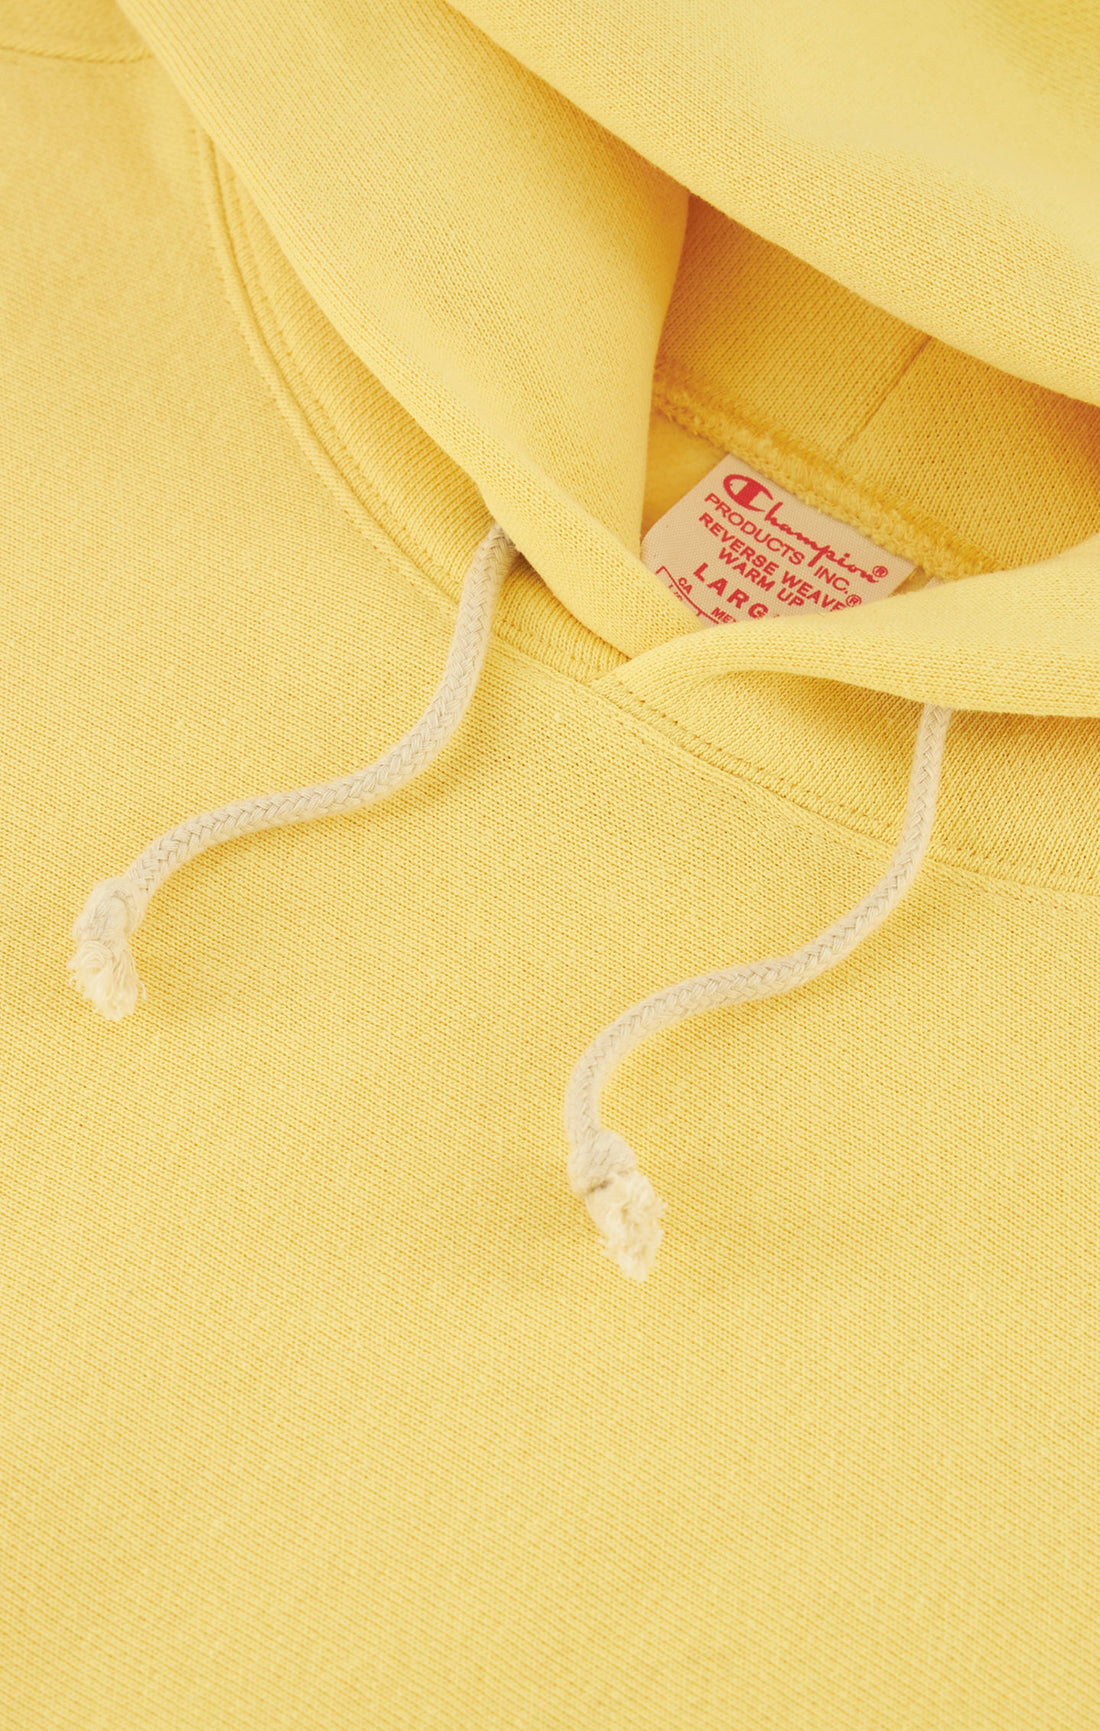 Champion Reverse Weave Soft Fleece Hoodie Yellow - Hympala Store 